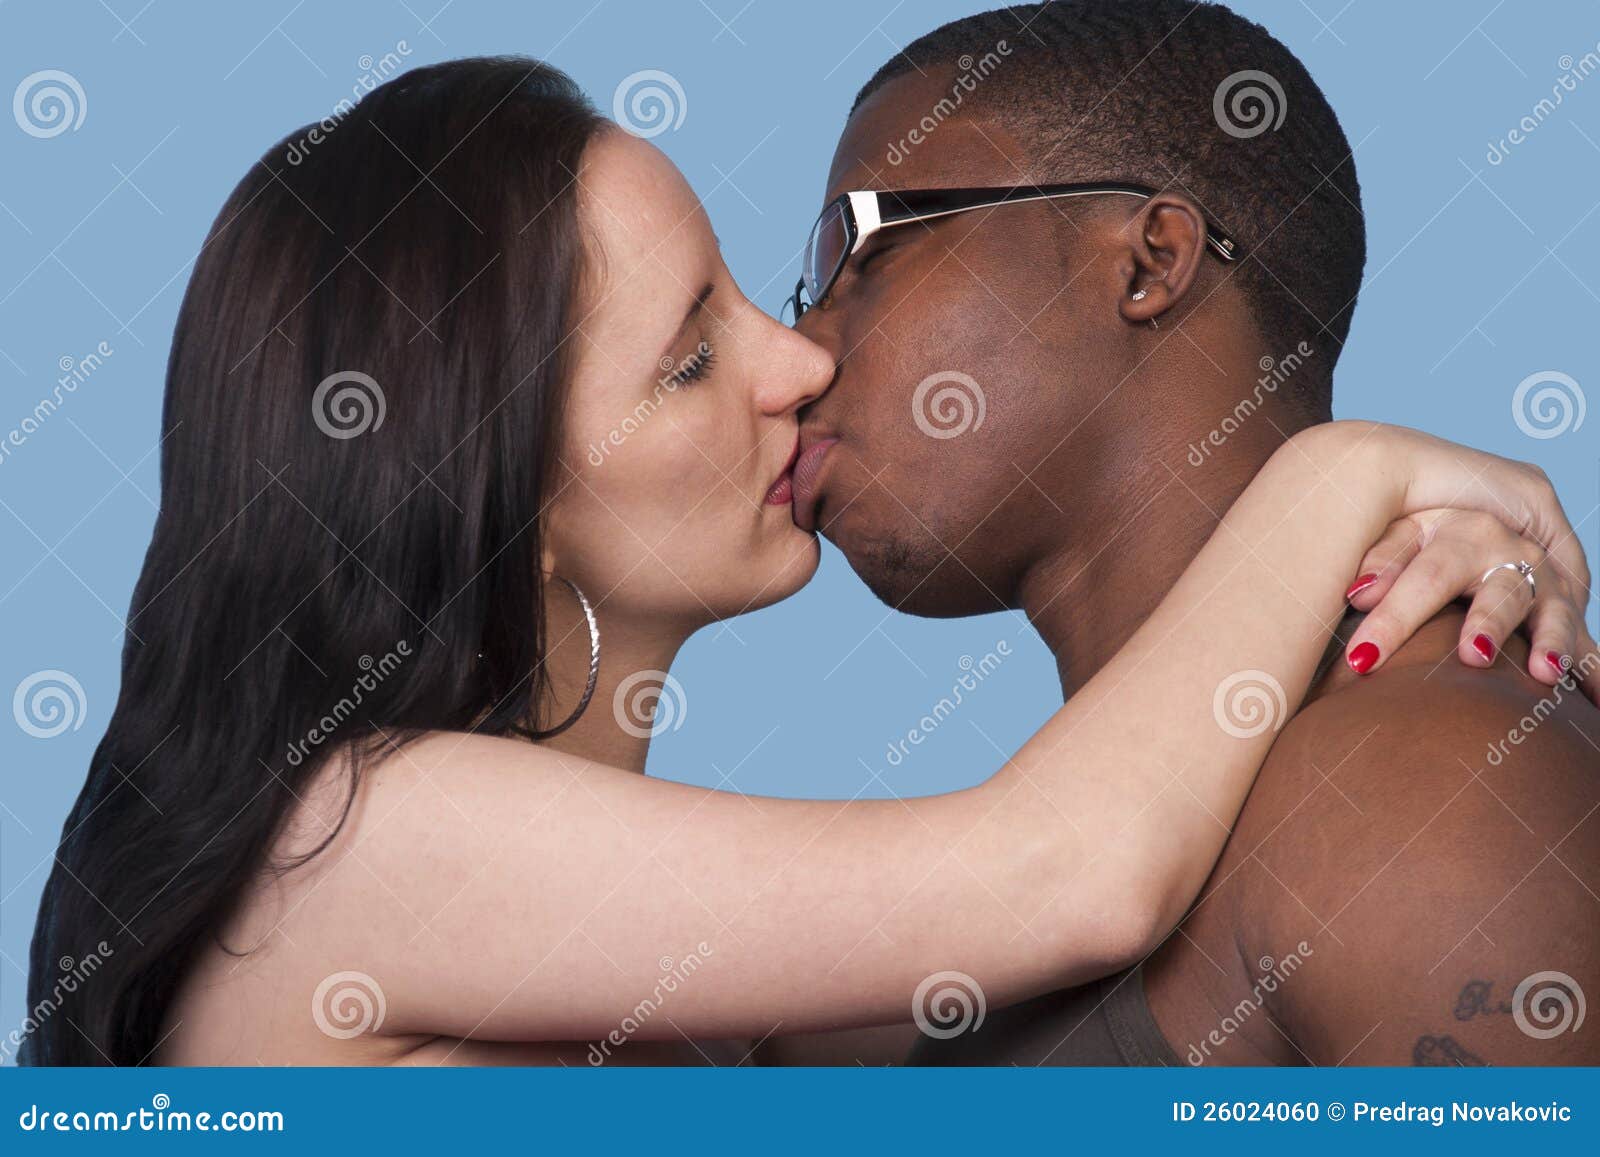 Black Men Making Love To White Women